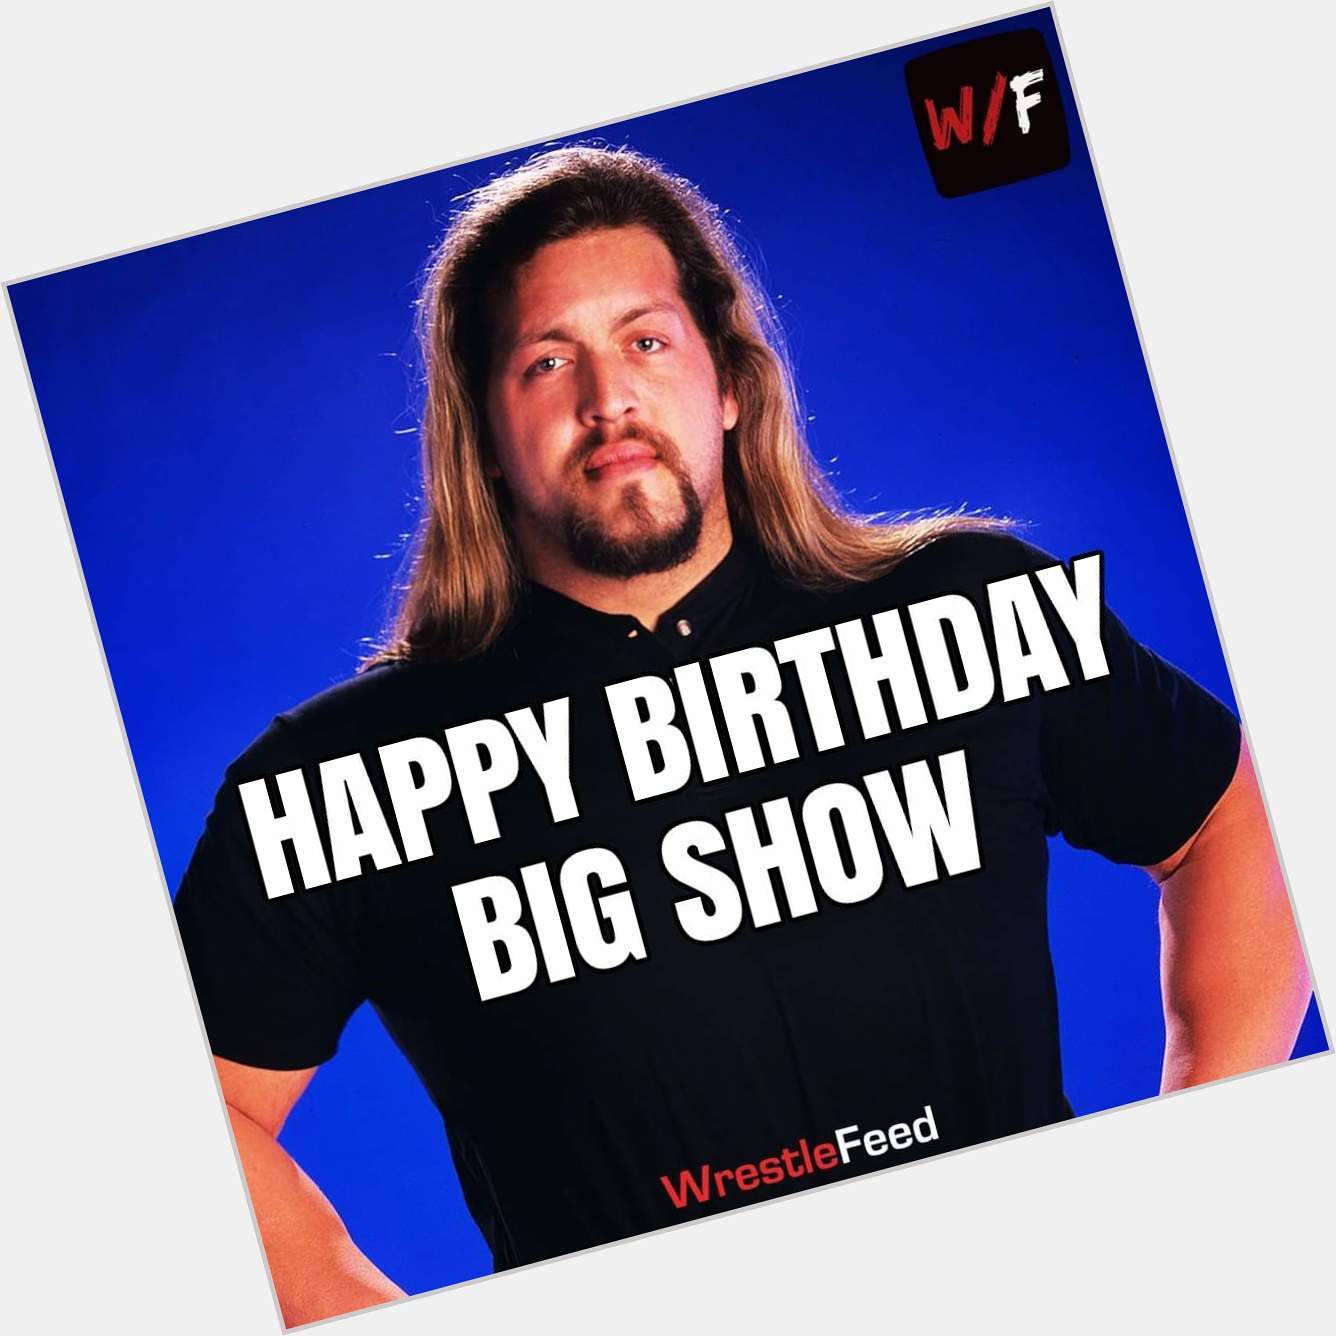 Old School WWF Attitude Era Legend The Big Show celebrates his 50th birthday today. HAPPY BIRTHDAY    